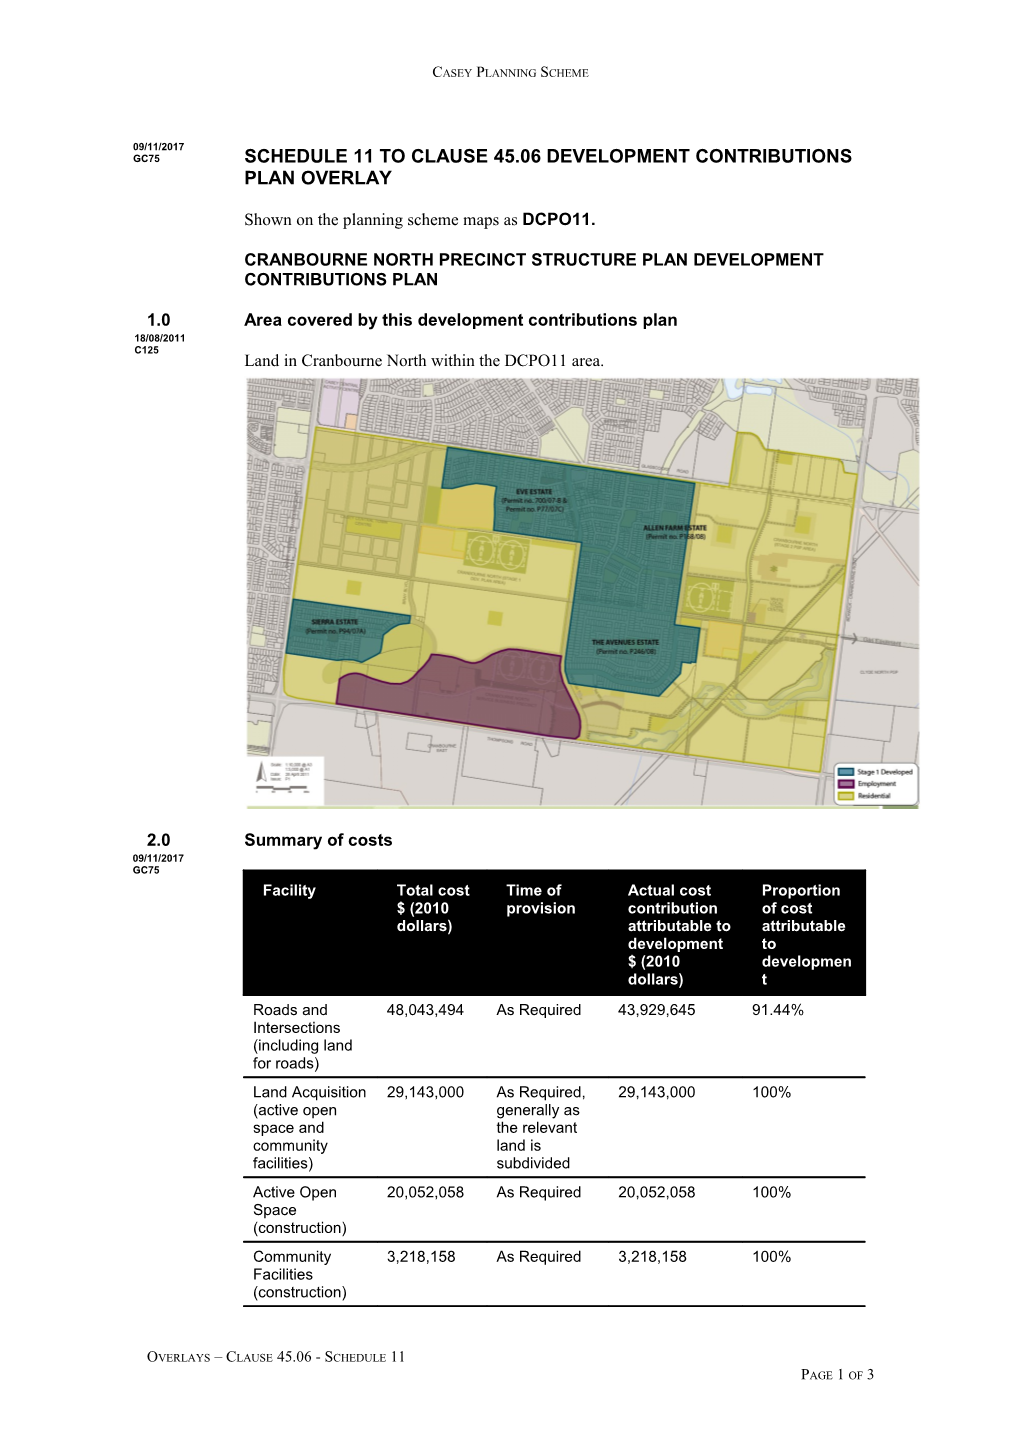 Cranbourne North Precinct Structure Plan Development Contributions Plan